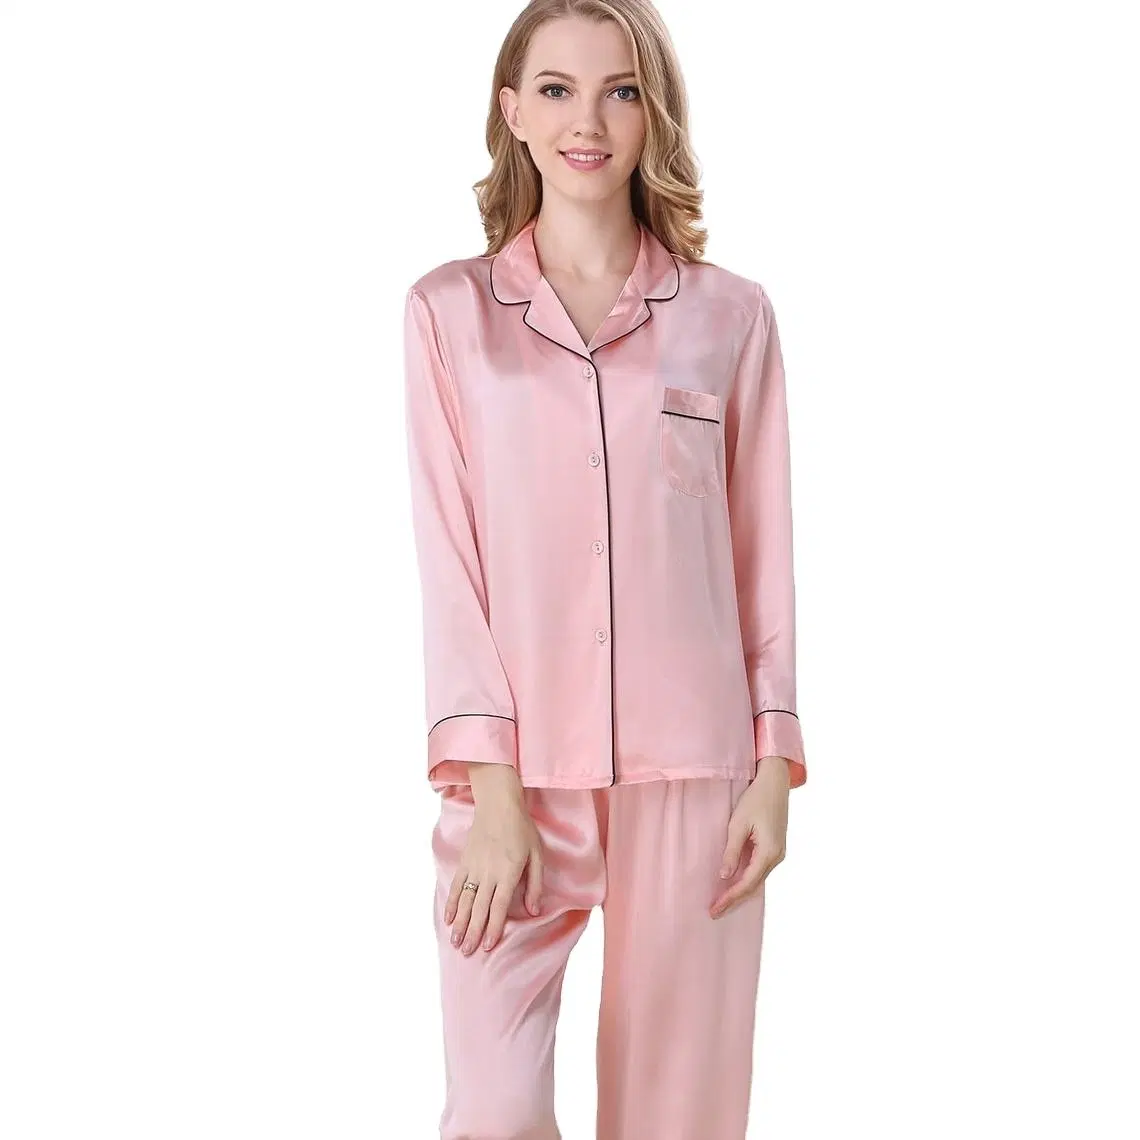 Hot Sale Luxury and Soft Silk Pajamas Women 100% Mulberries Nightwear 2 Pieces Suit Sleepwear